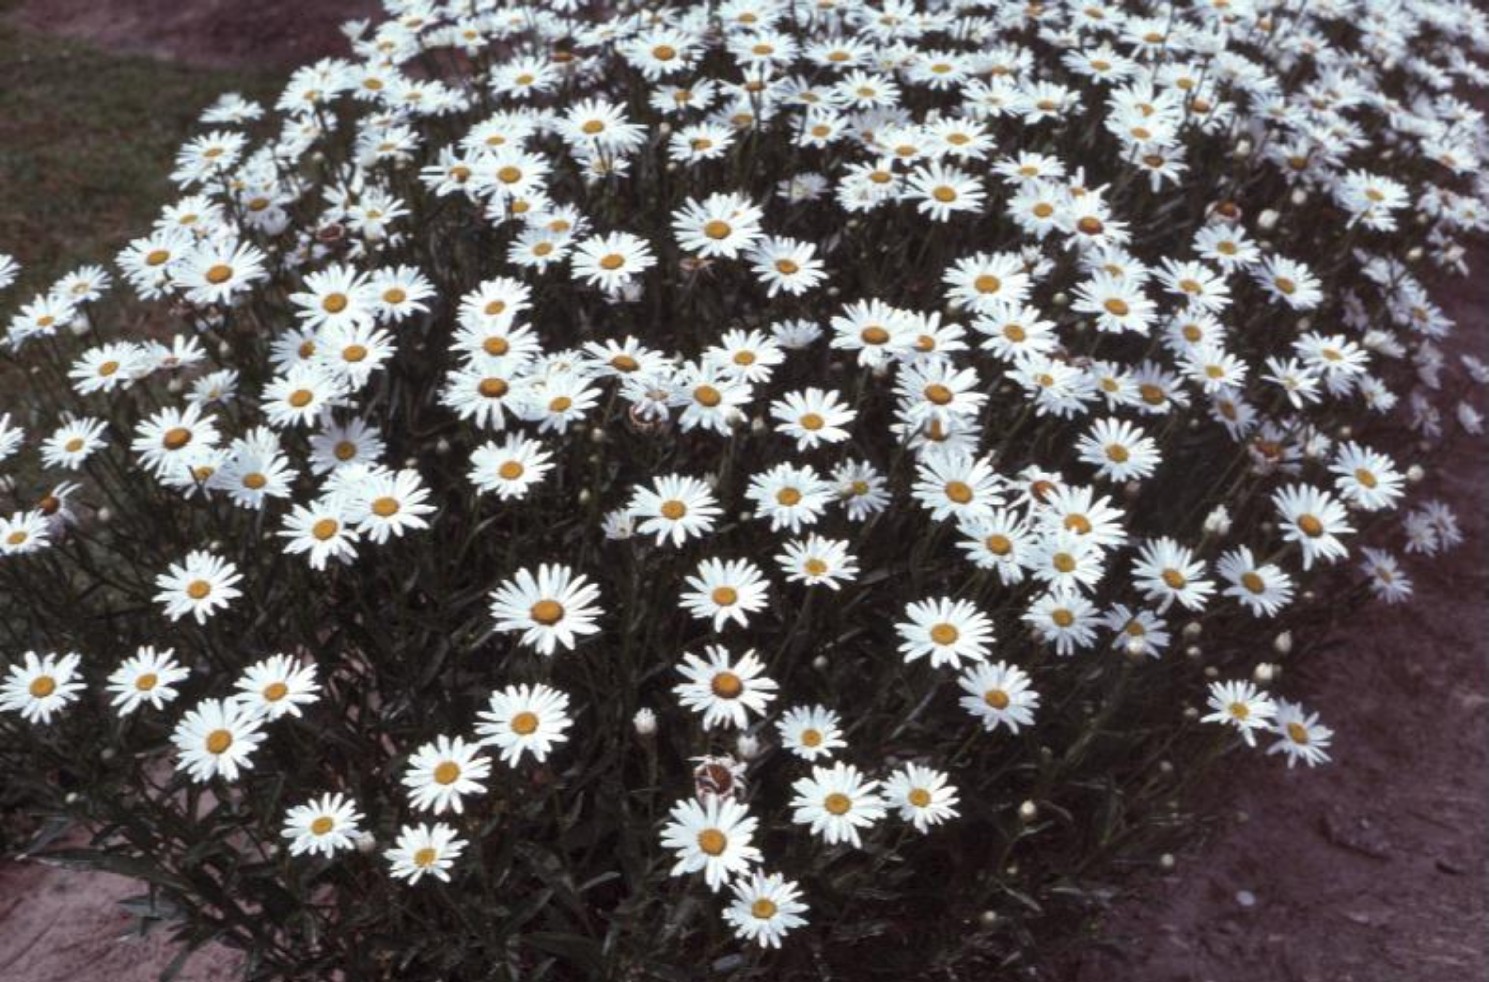 Chrysanthemum x superbum / Shasta Daisy